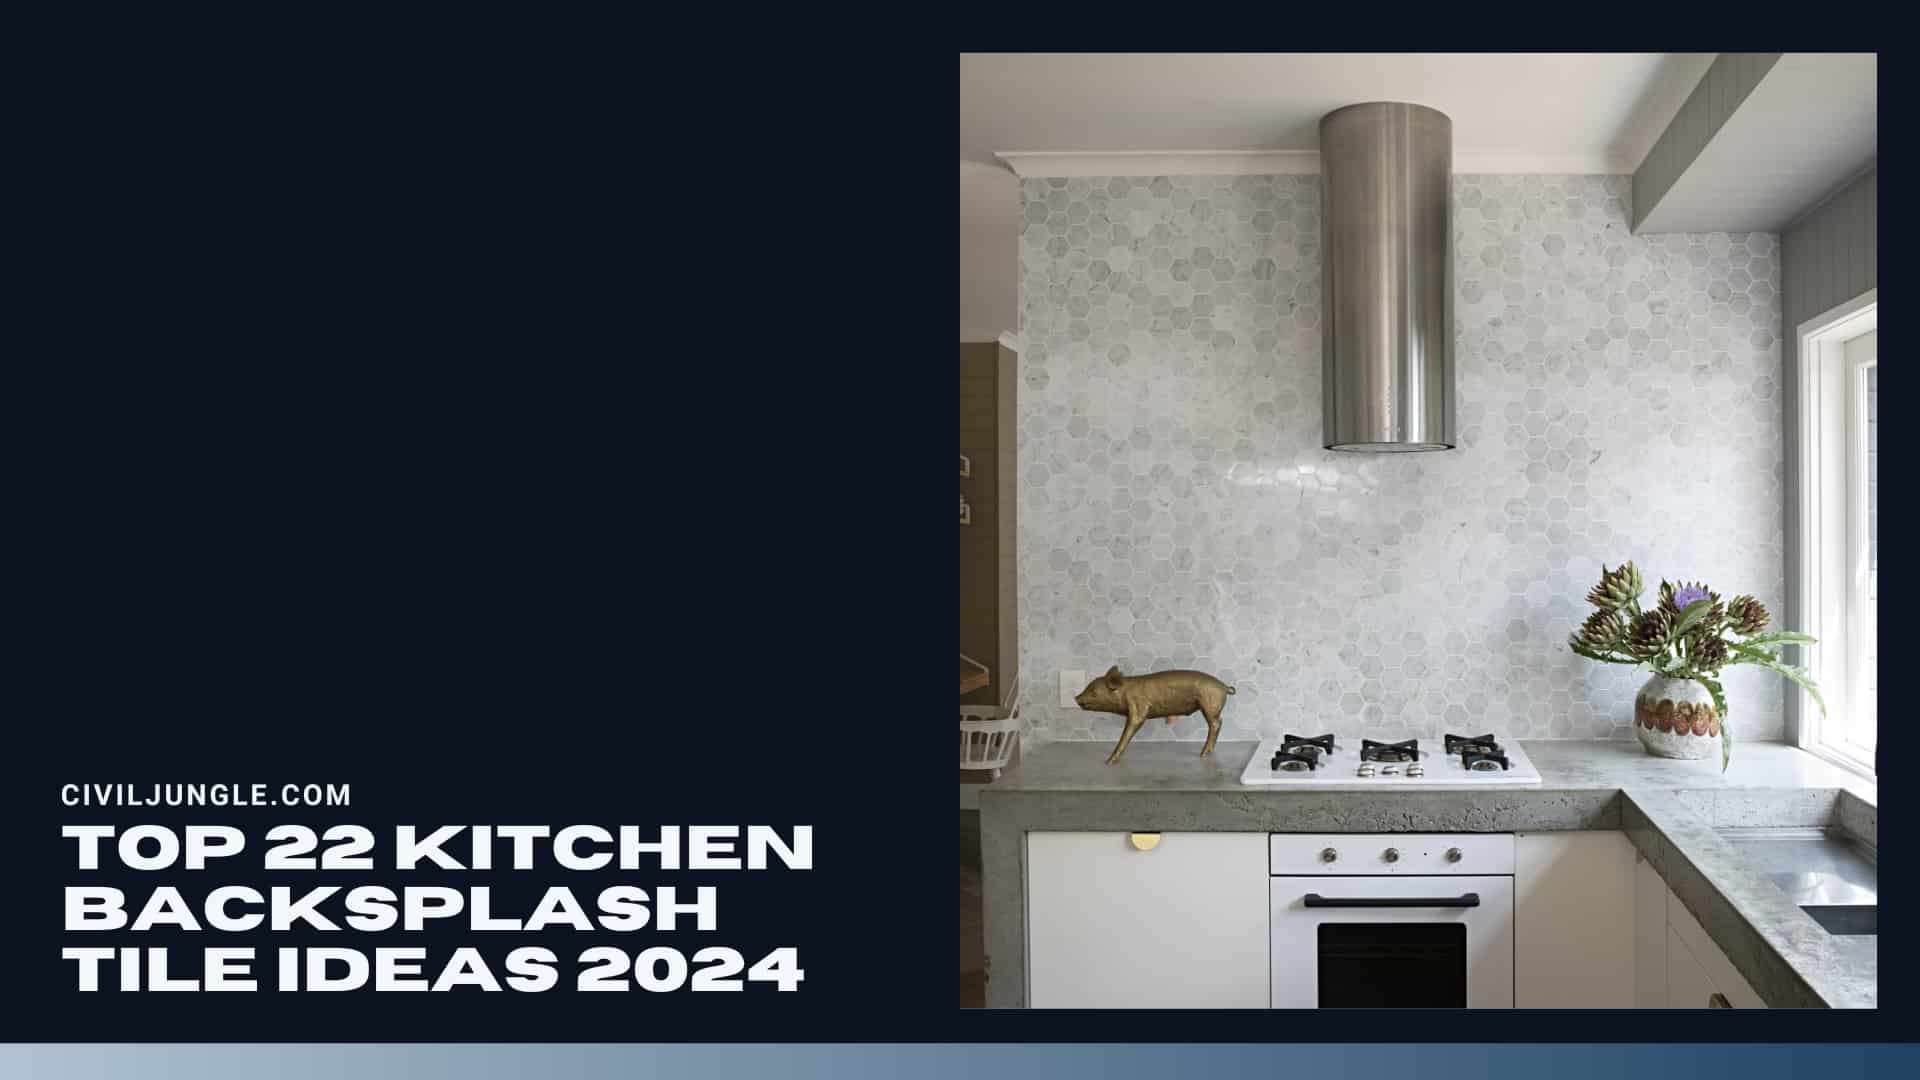 Top 22 Kitchen Backsplash Tile Ideas 2024